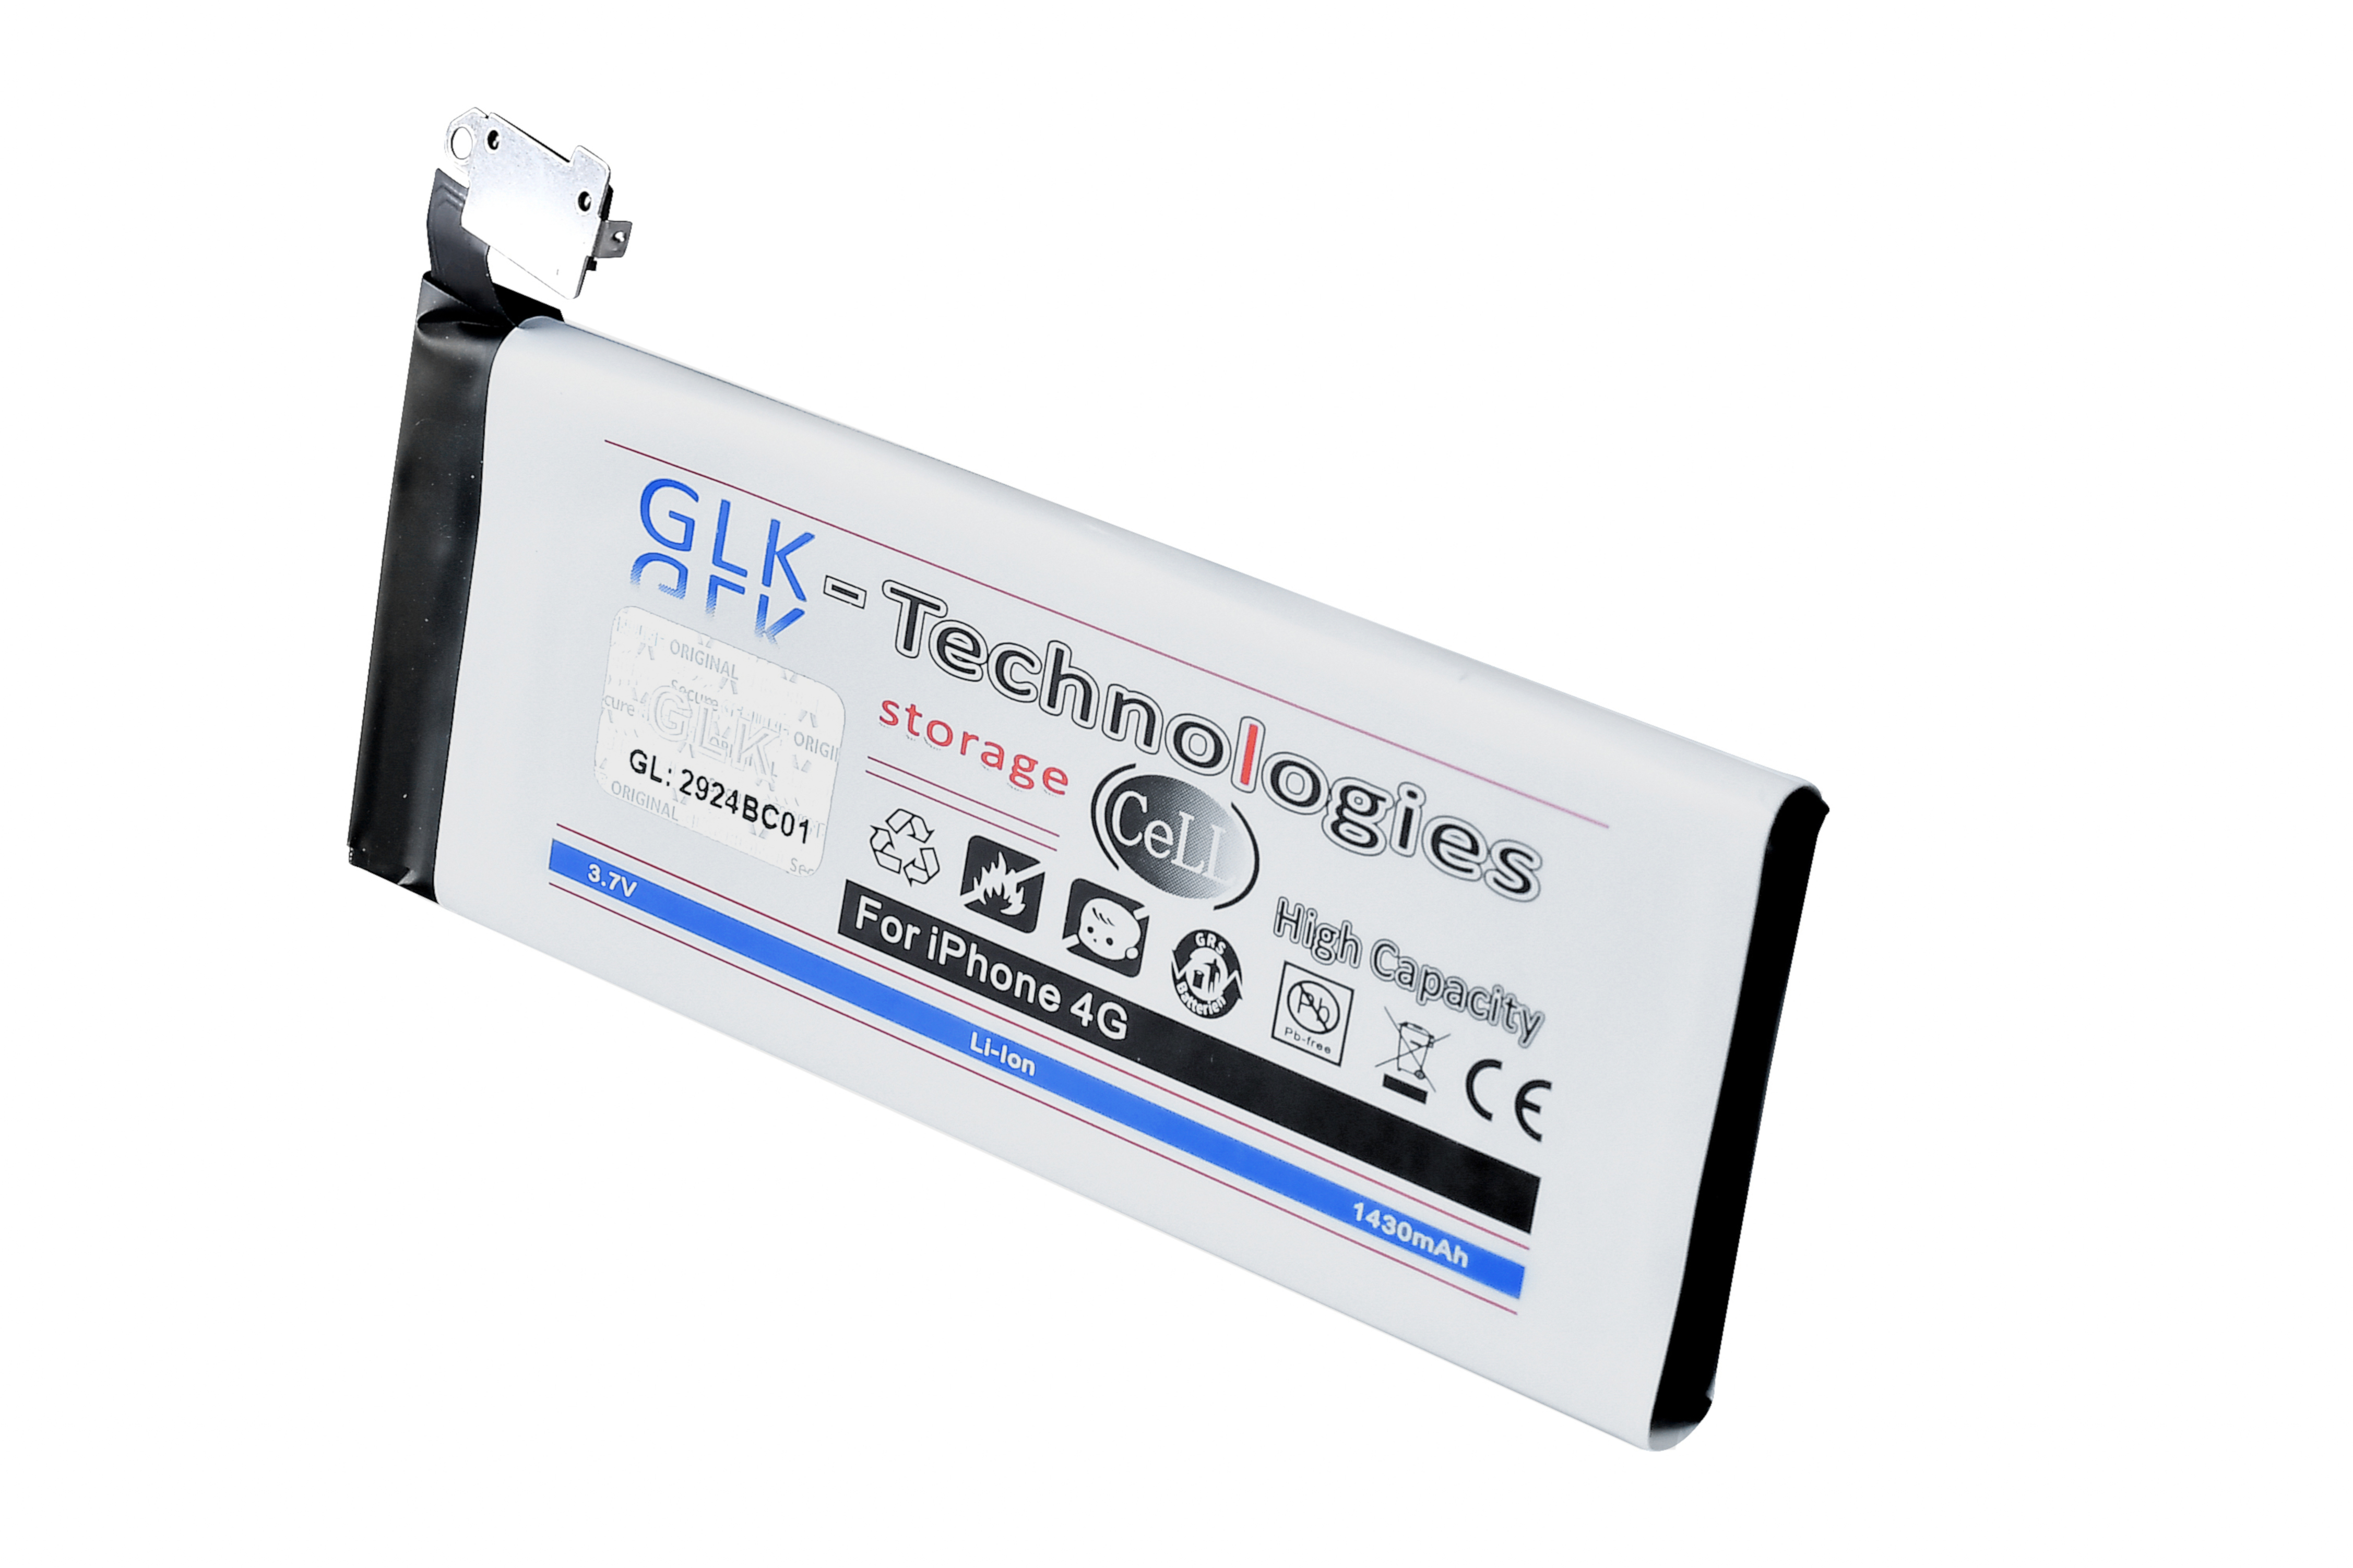 Akku Lithium-Ionen, iPhone Lithium-Ionen-Akku inkl. Battery 1430mAh 1430mAh High Smartphone Ersatz Ersatz 4 Power Werkzeug GLK-TECHNOLOGIES für 3.8 Akku, Volt,